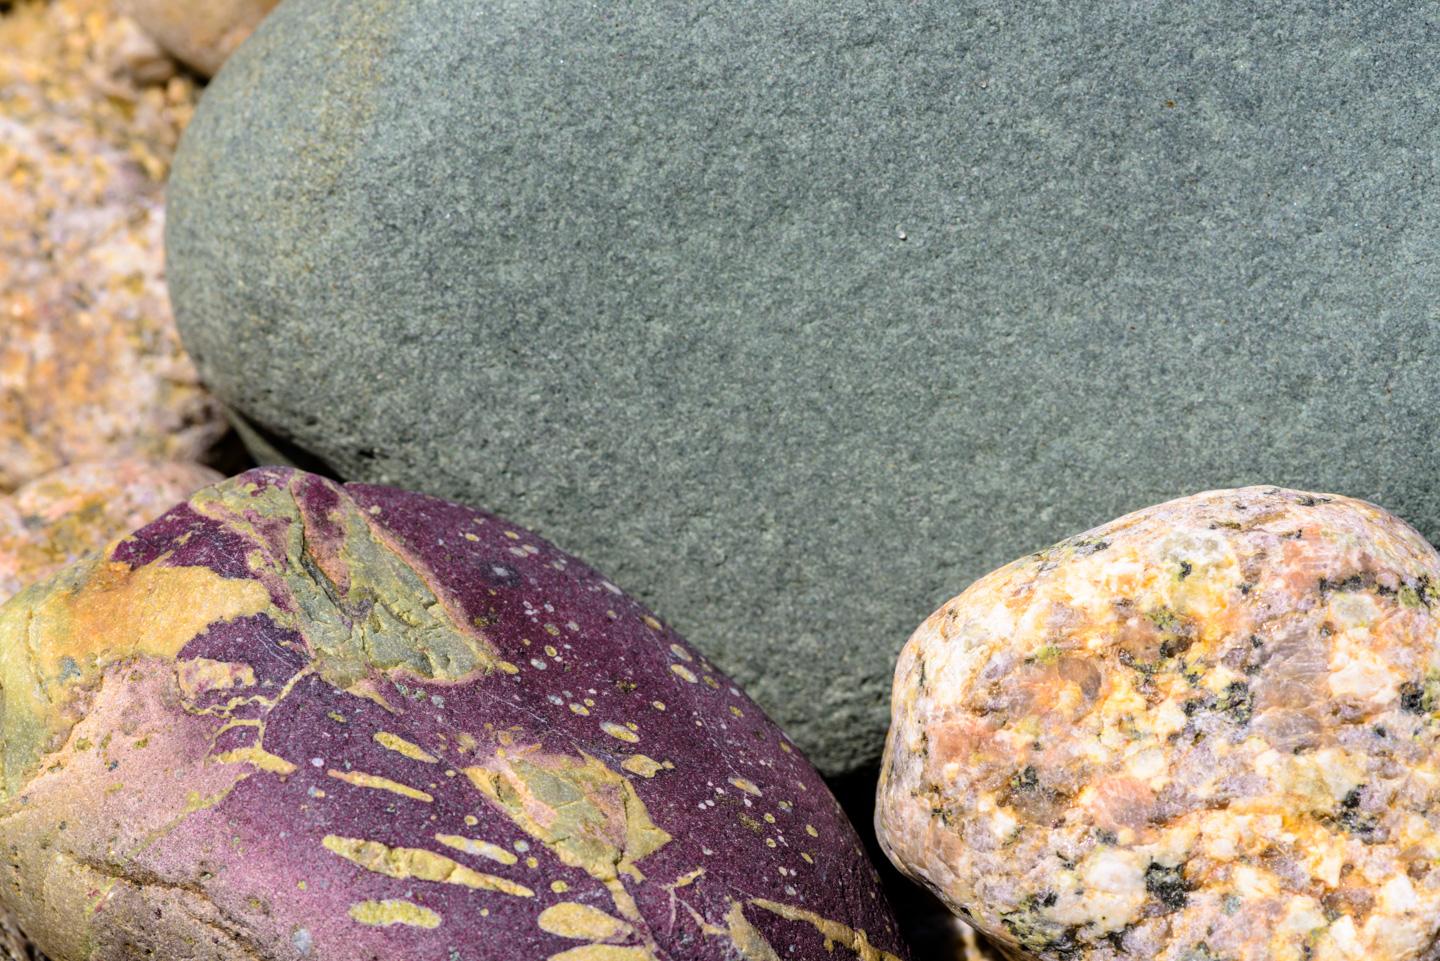 Colorful rocks